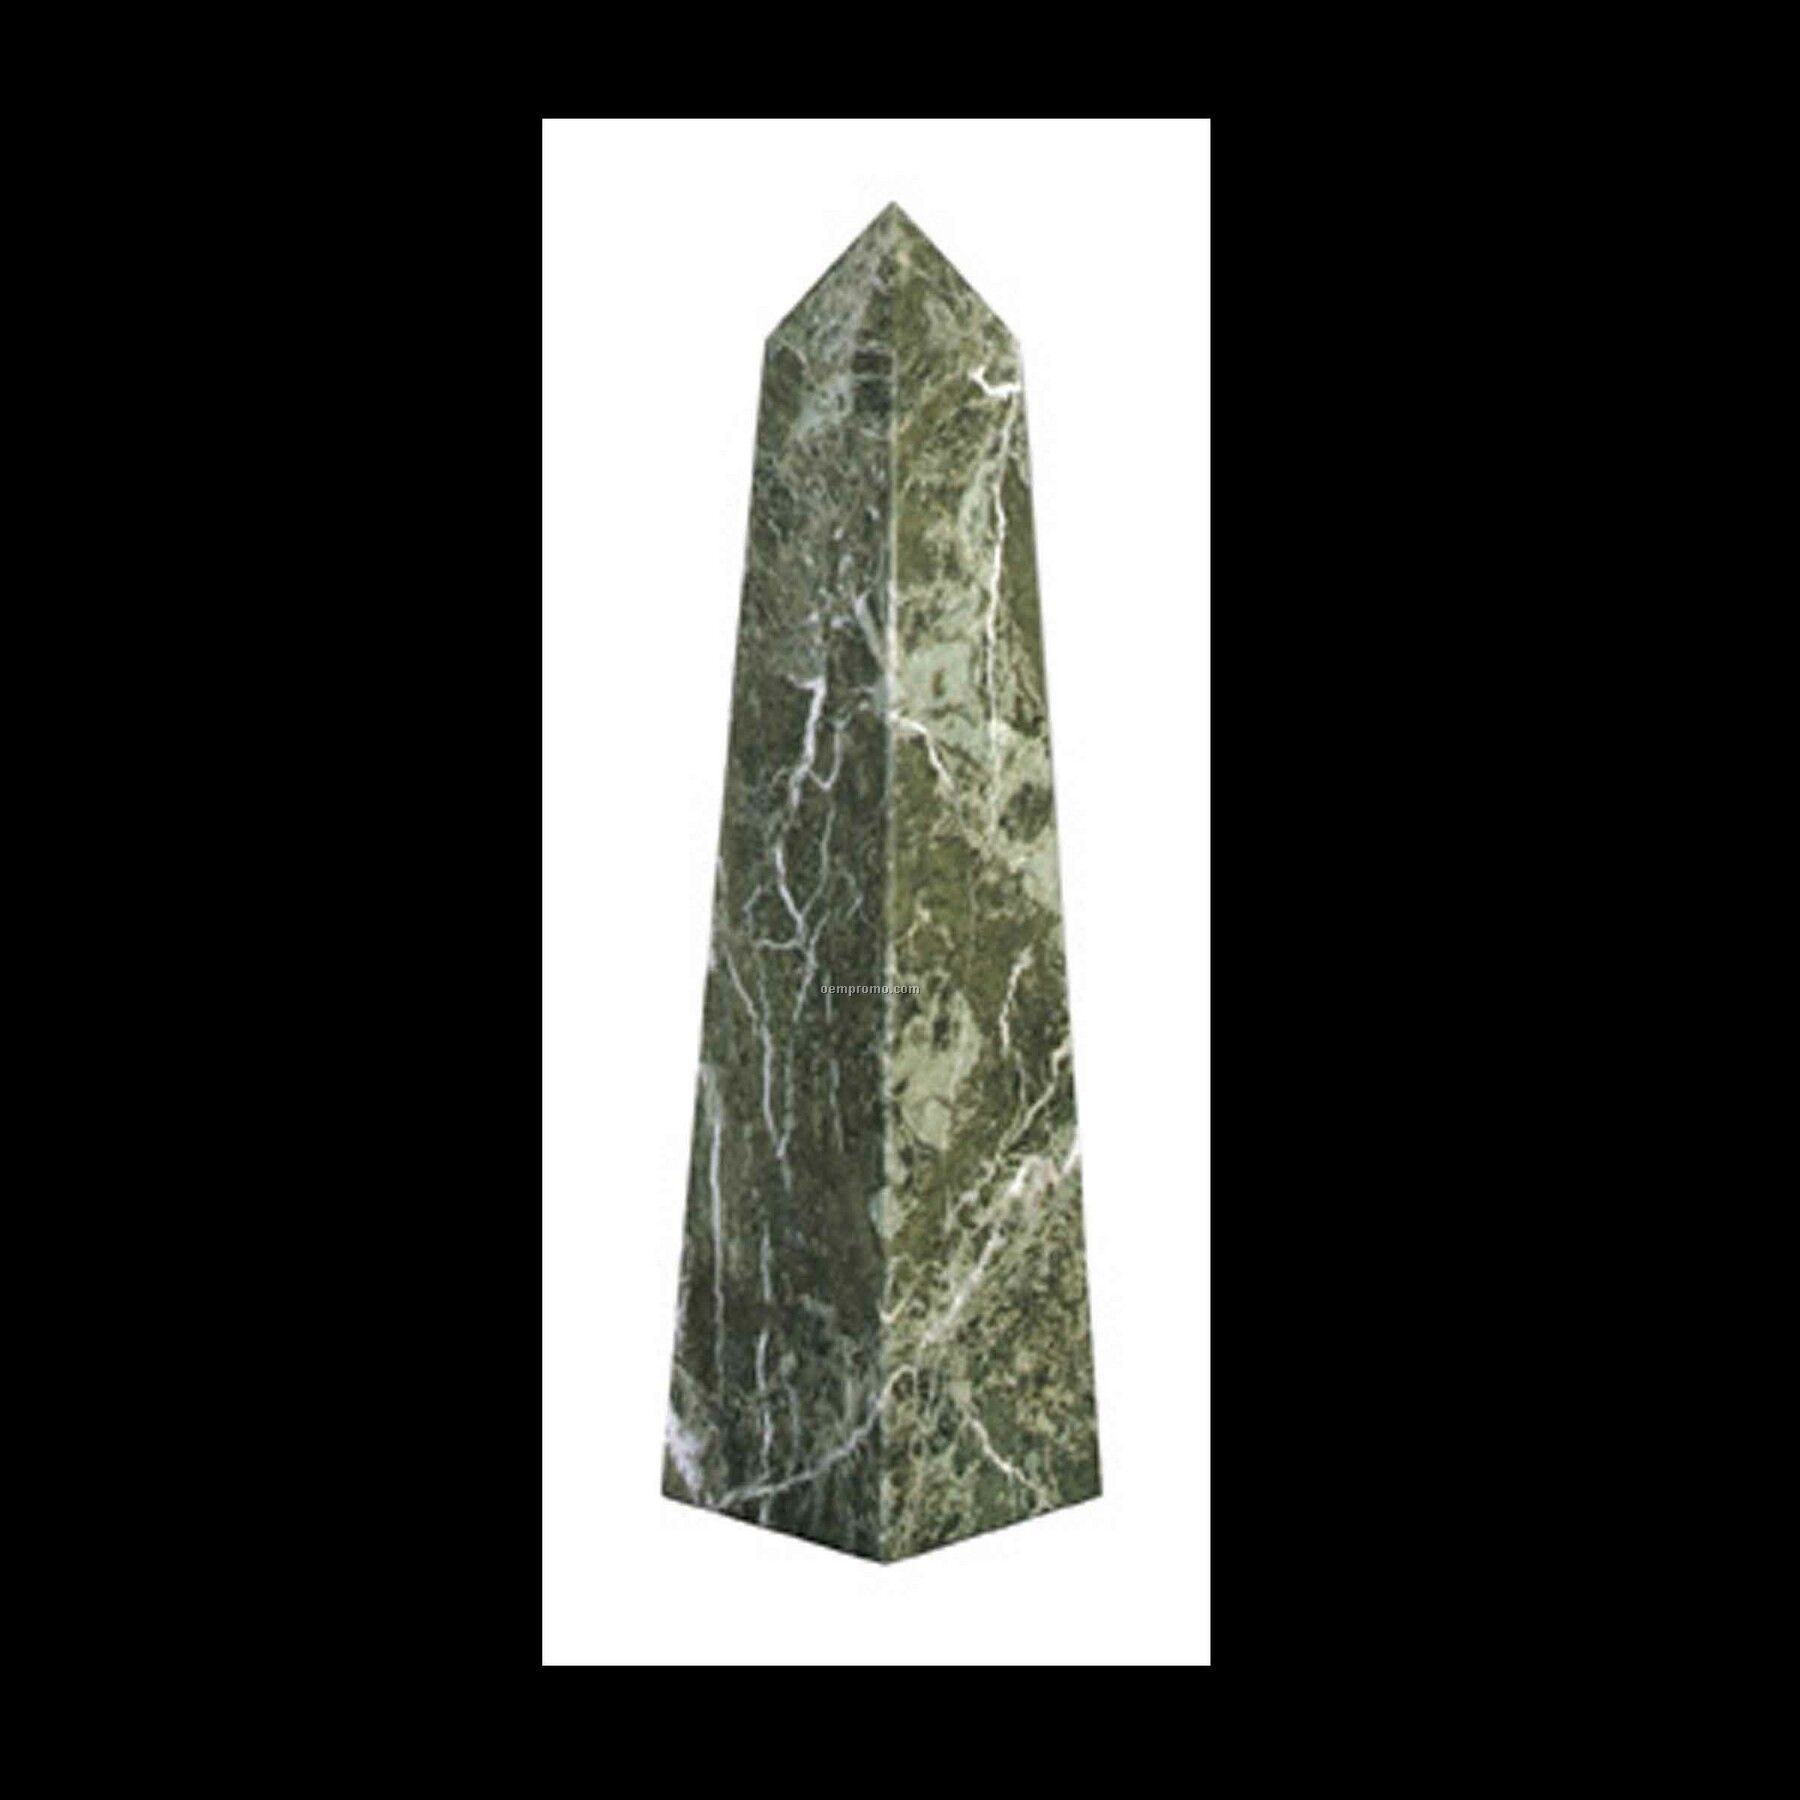 Medium-large Obelisk Pinnacle Award - Jade Leaf Green